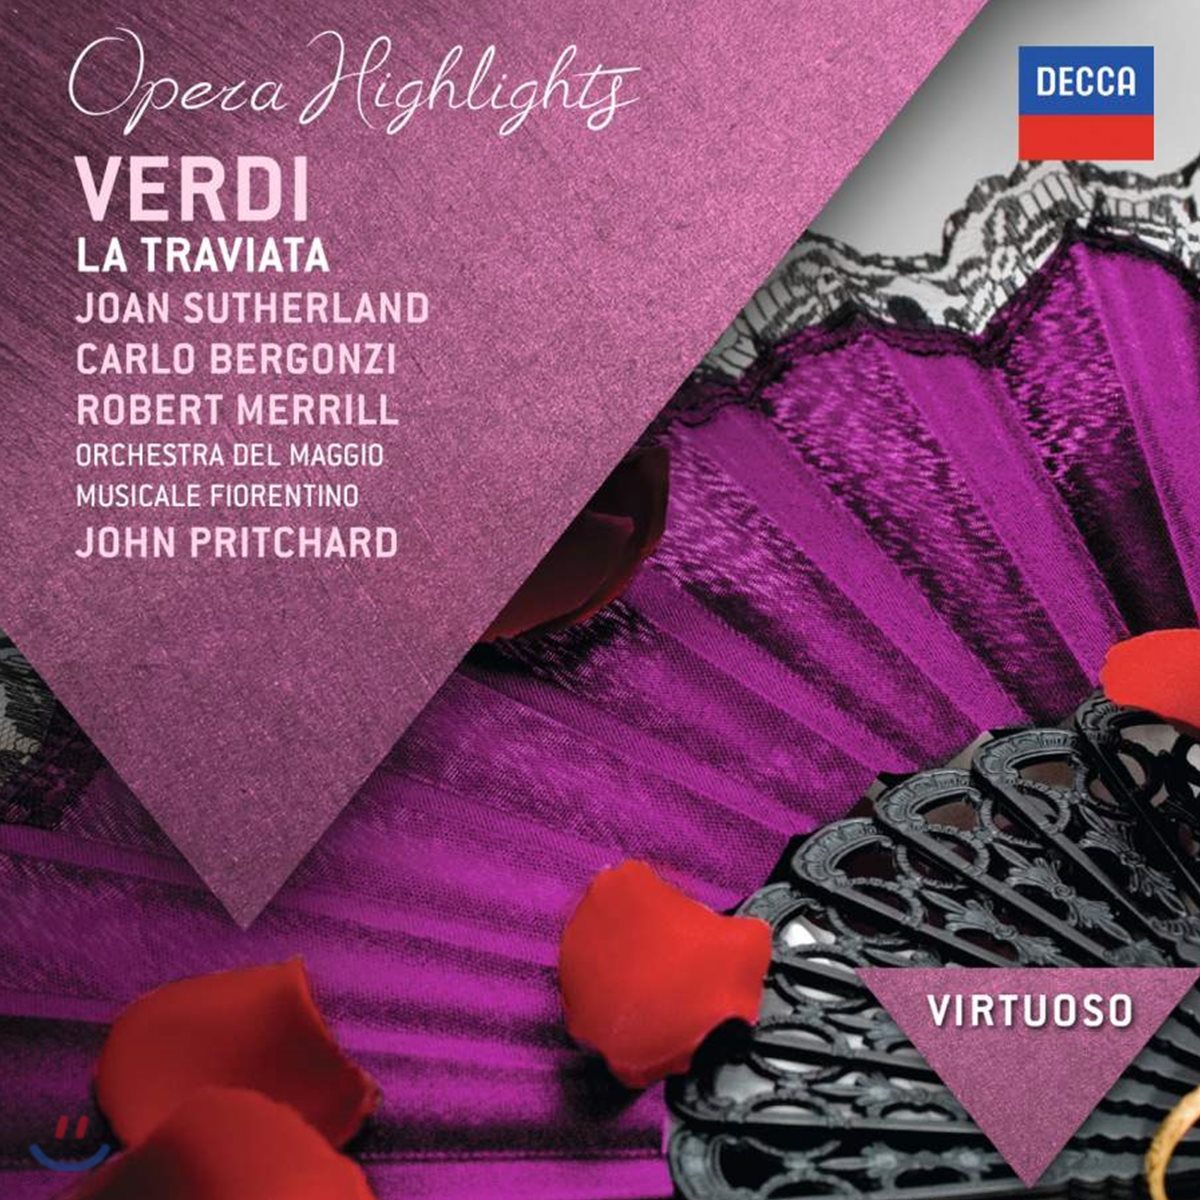 Robert Merrill 베르디: 라 트라비아타 하이라이트 (Verdi: La Traviata highlights)